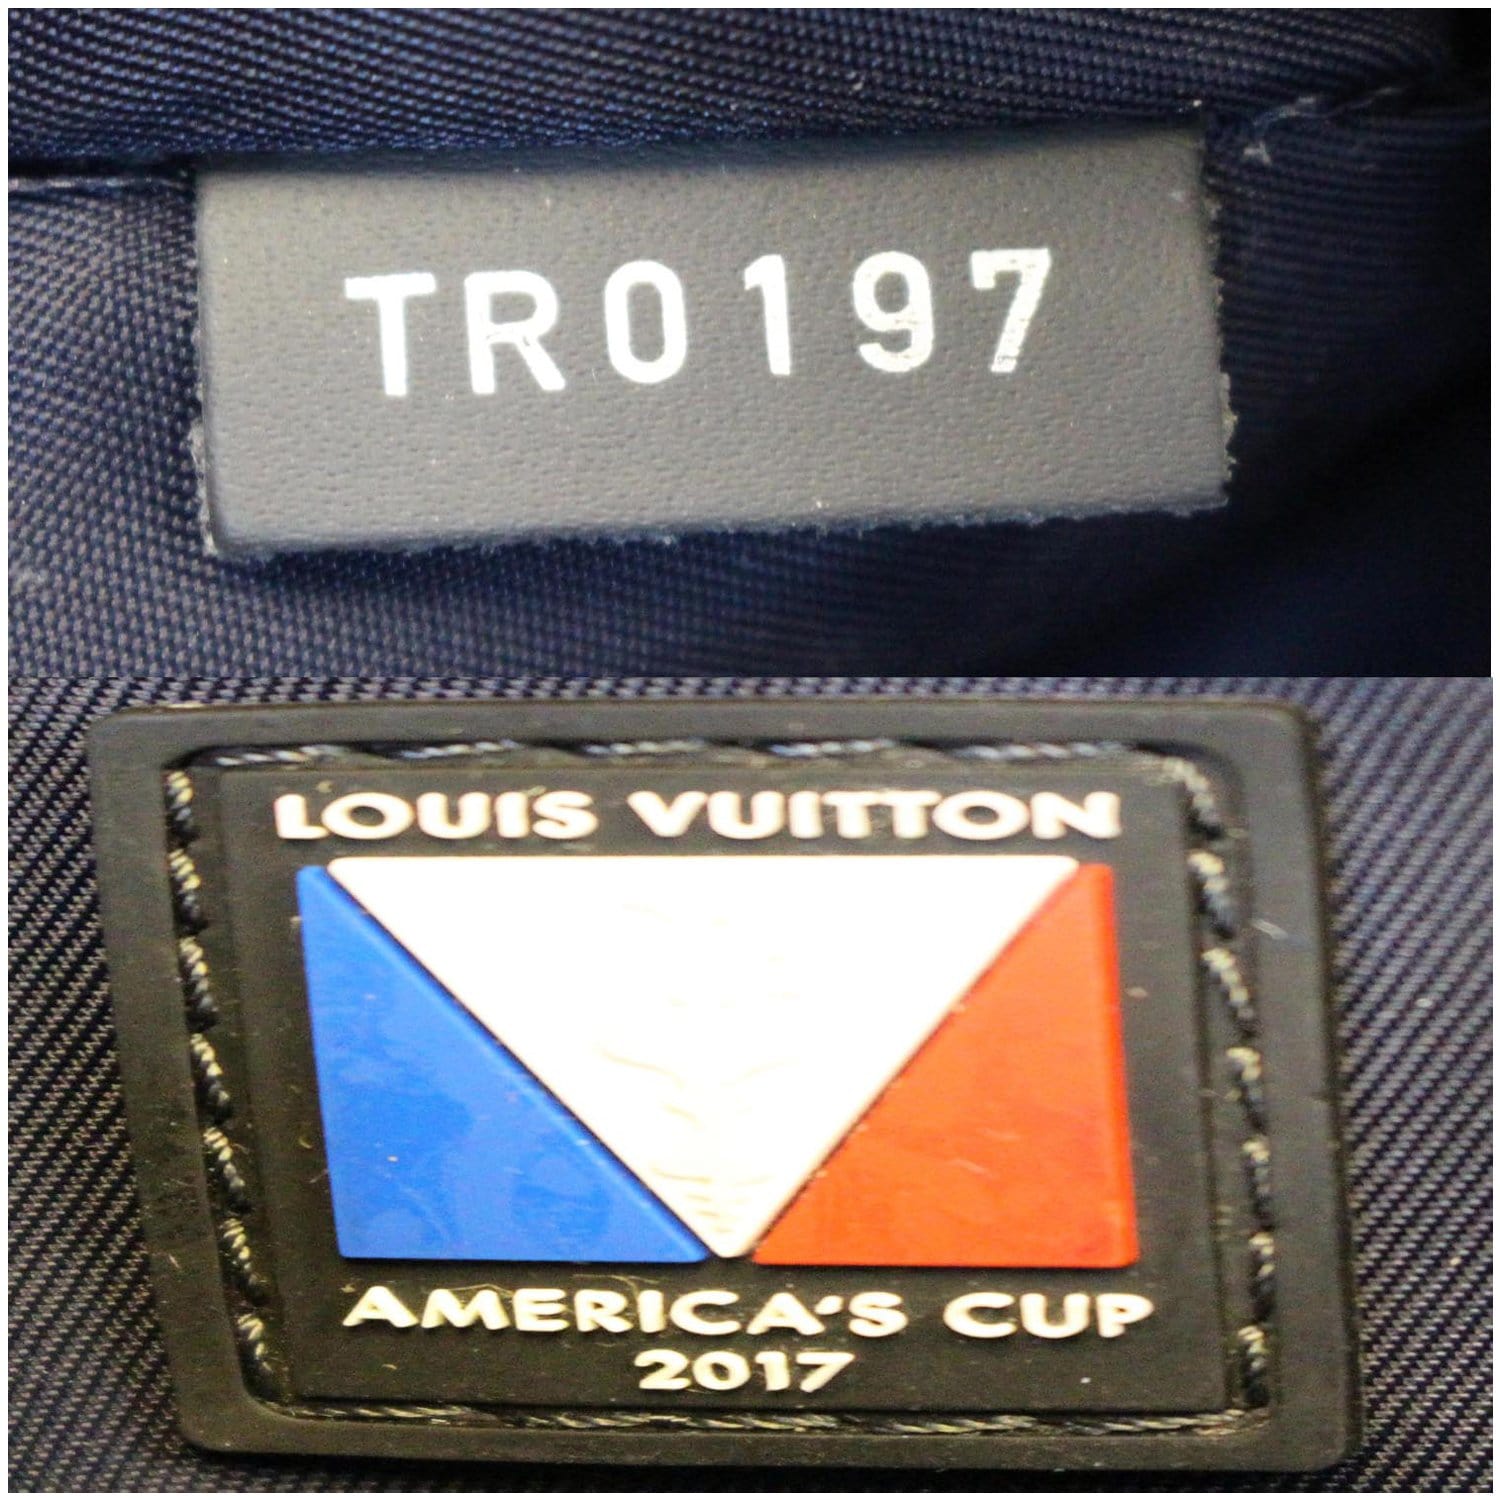 LOUIS VUITTON America's Cup 2017